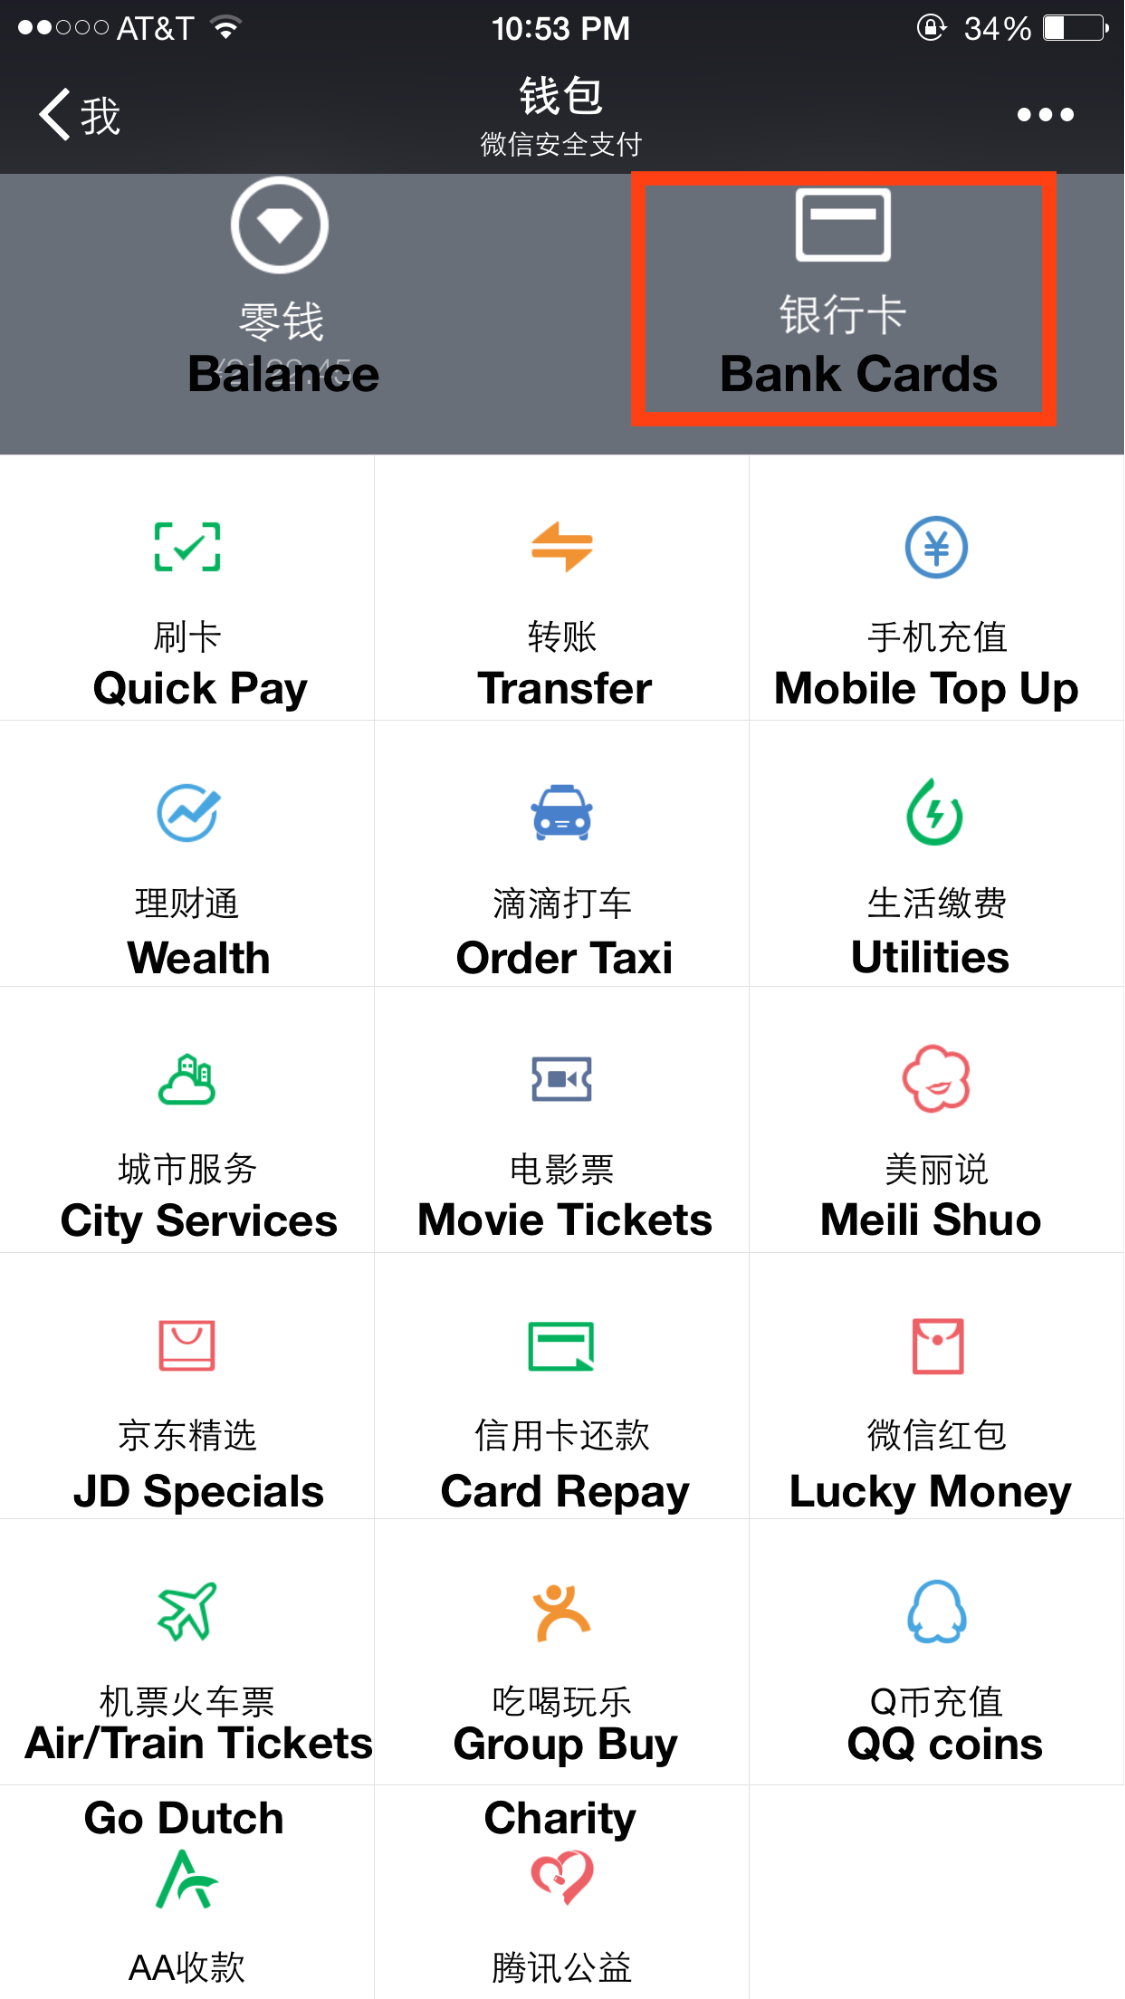 WeChat Mobile Payment Platform Image